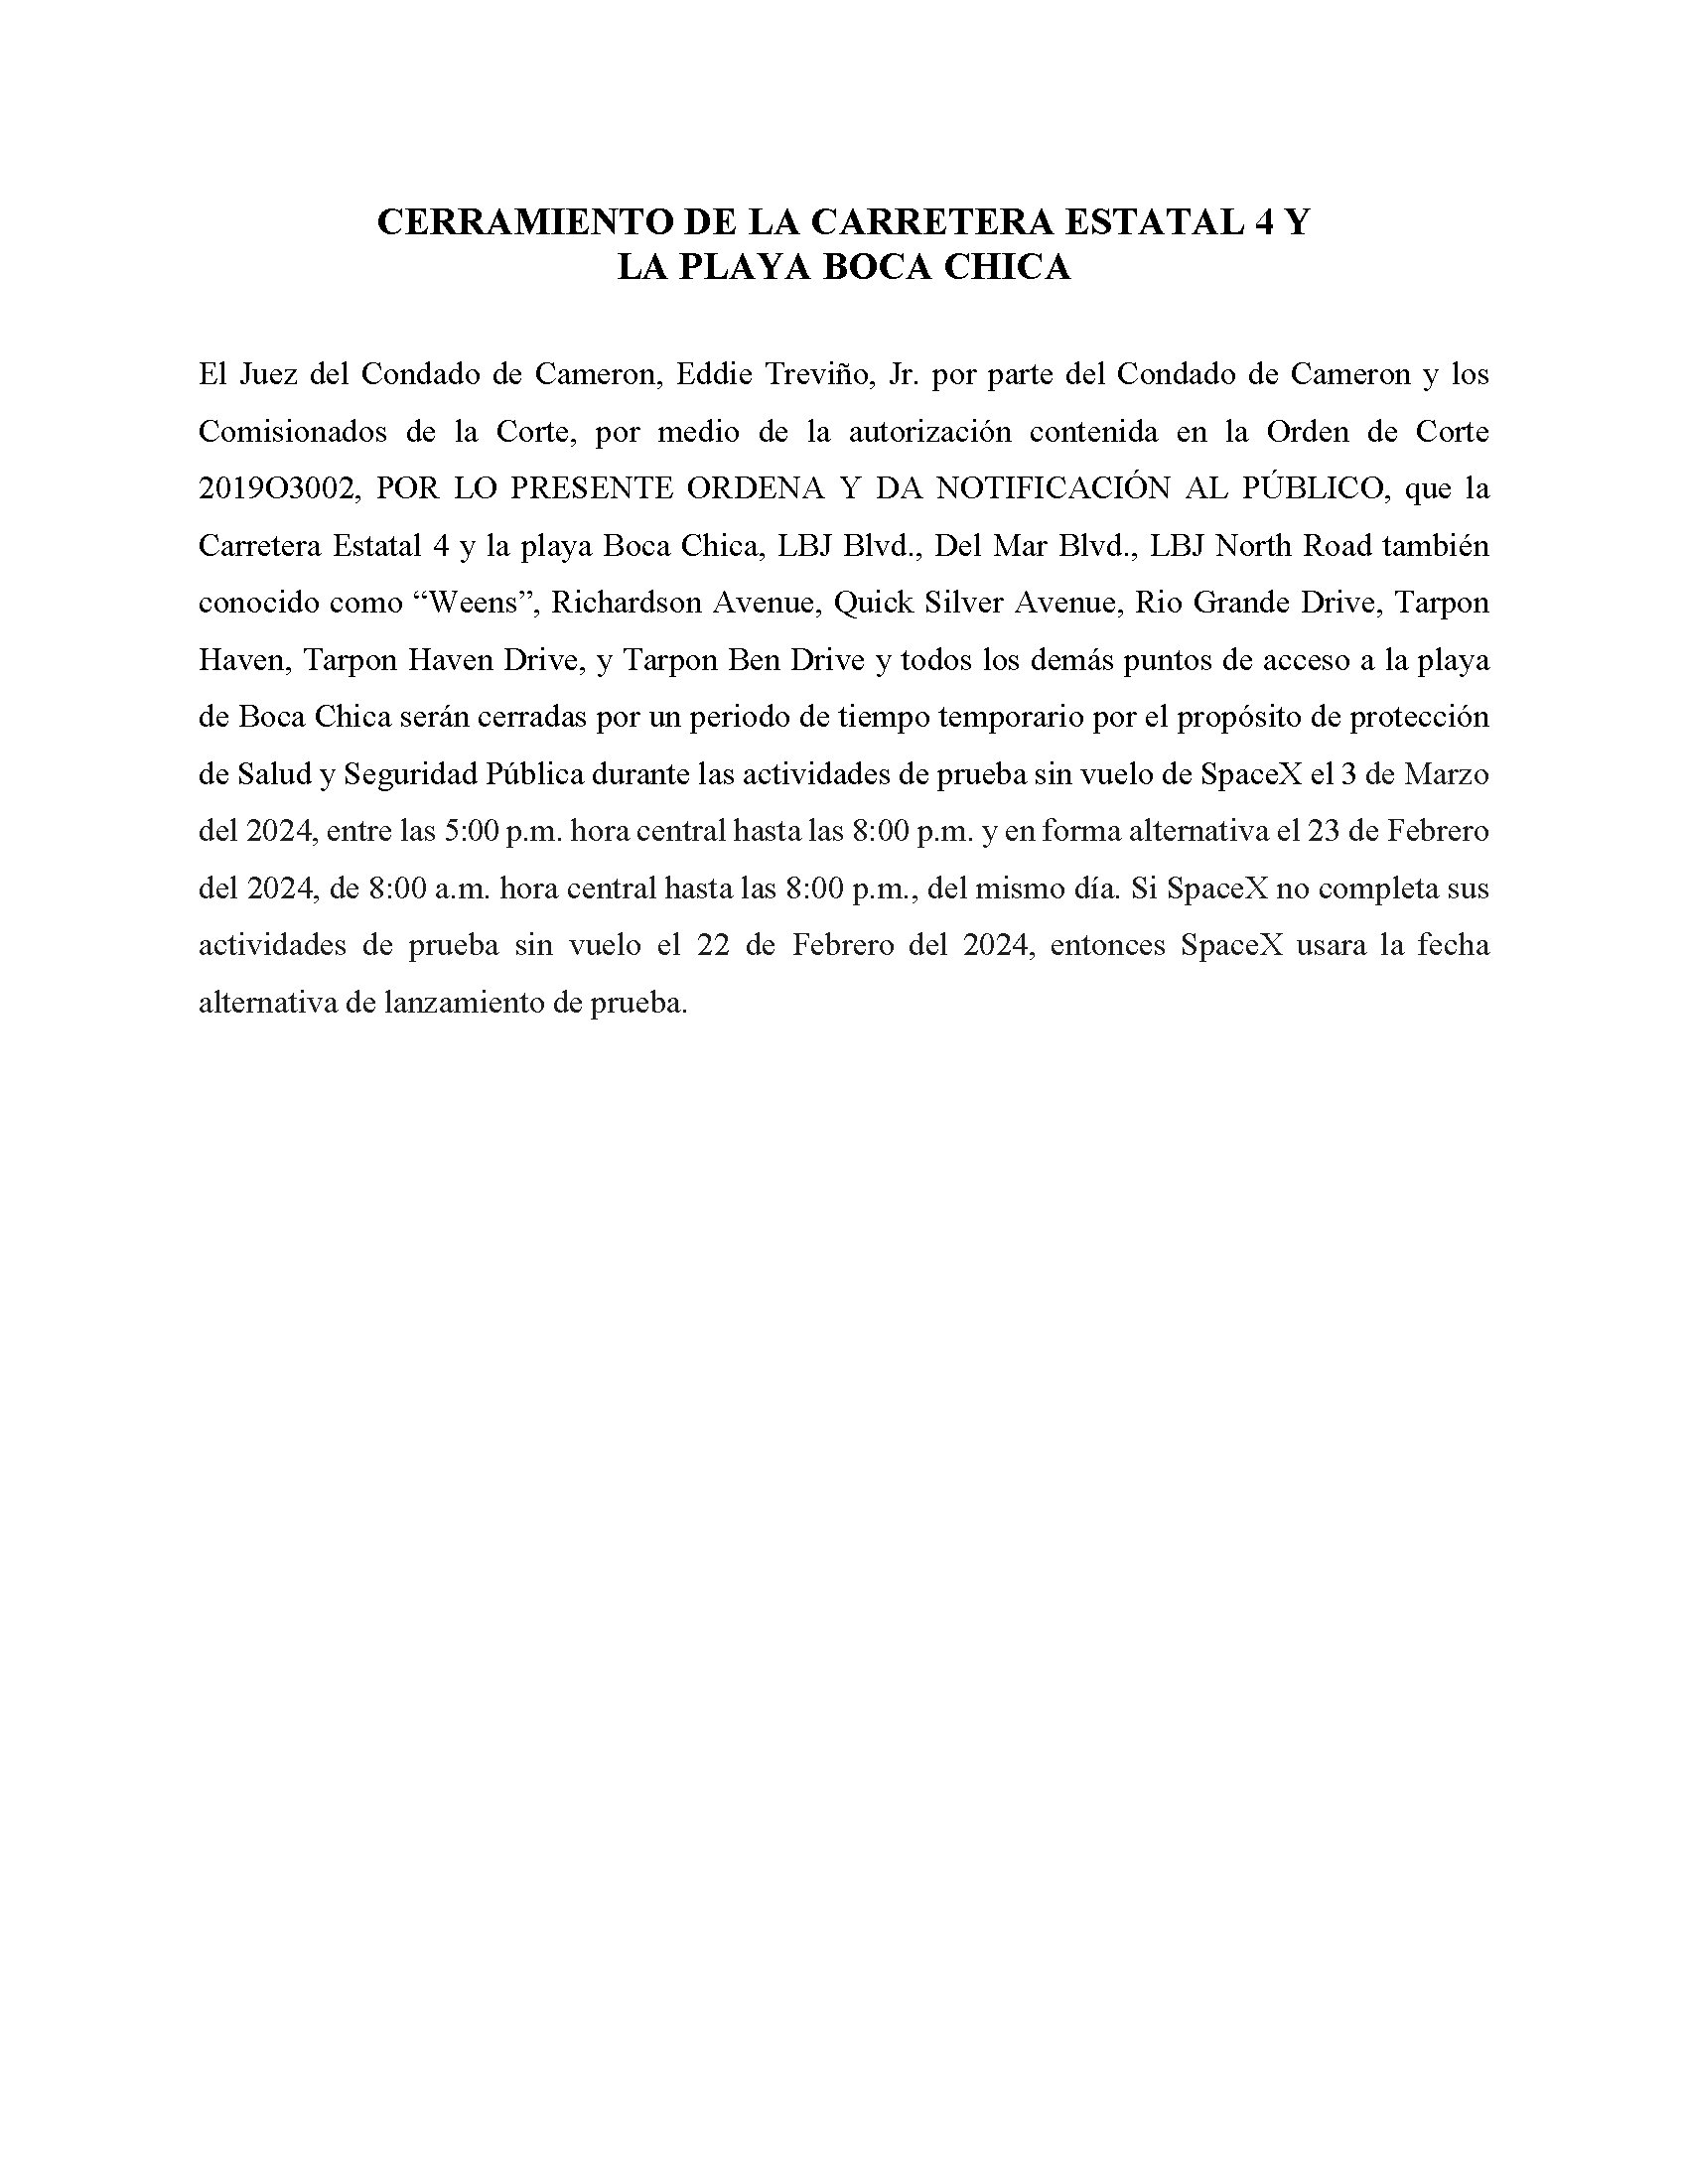 ORDER.CLOSURE OF HIGHWAY 4 Y LA PLAYA BOCA CHICA.SPANISH.03.03.2024